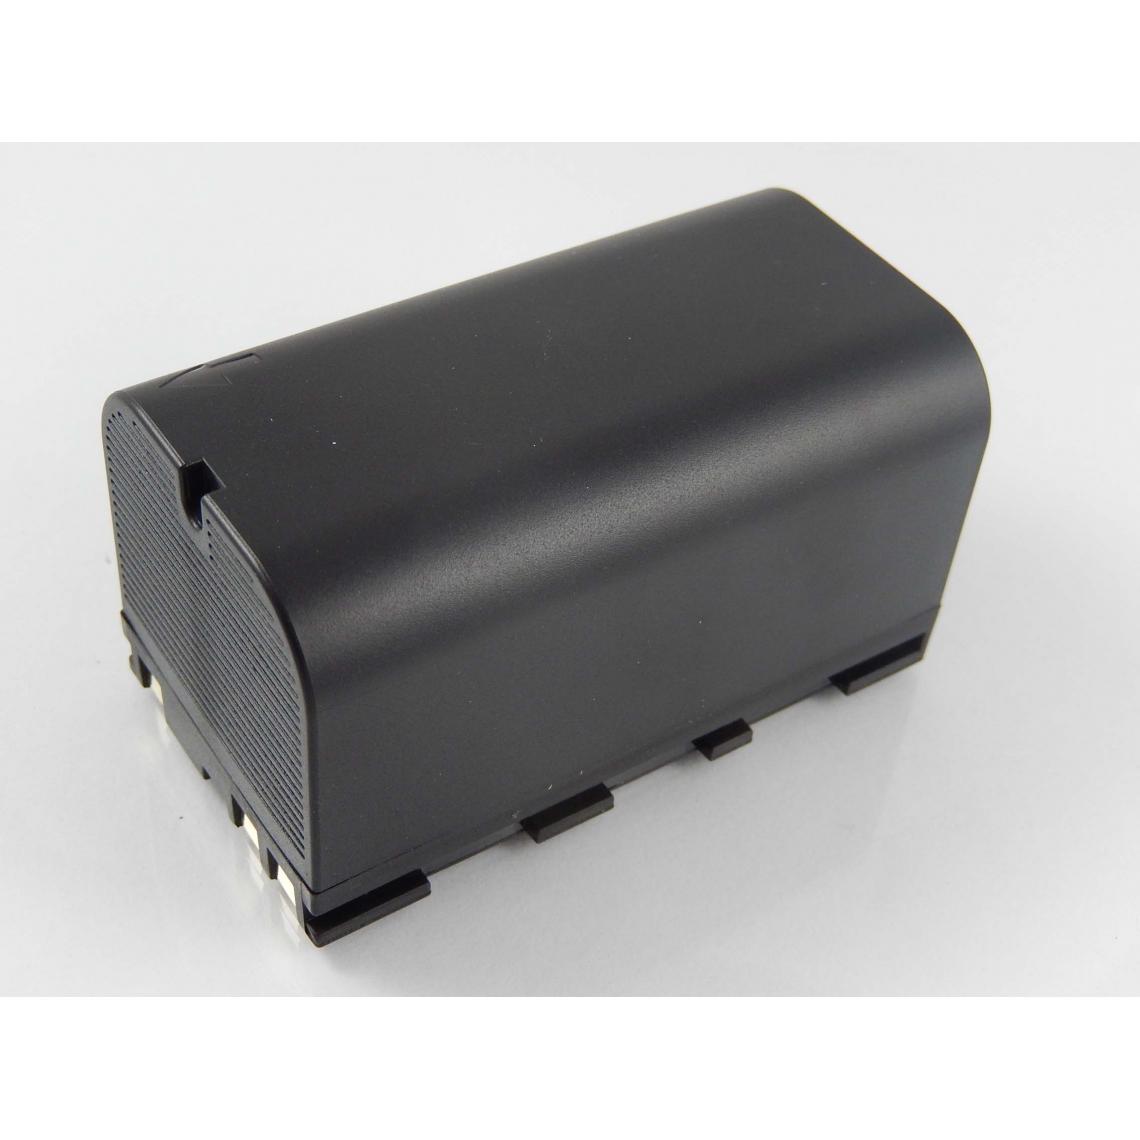 Vhbw - vhbw Batterie compatible avec Leica Flexline TS02, TS06, TS09 dispositif de mesure laser, outil de mesure (5600mAh, 7,4V, Li-ion) - Piles rechargeables